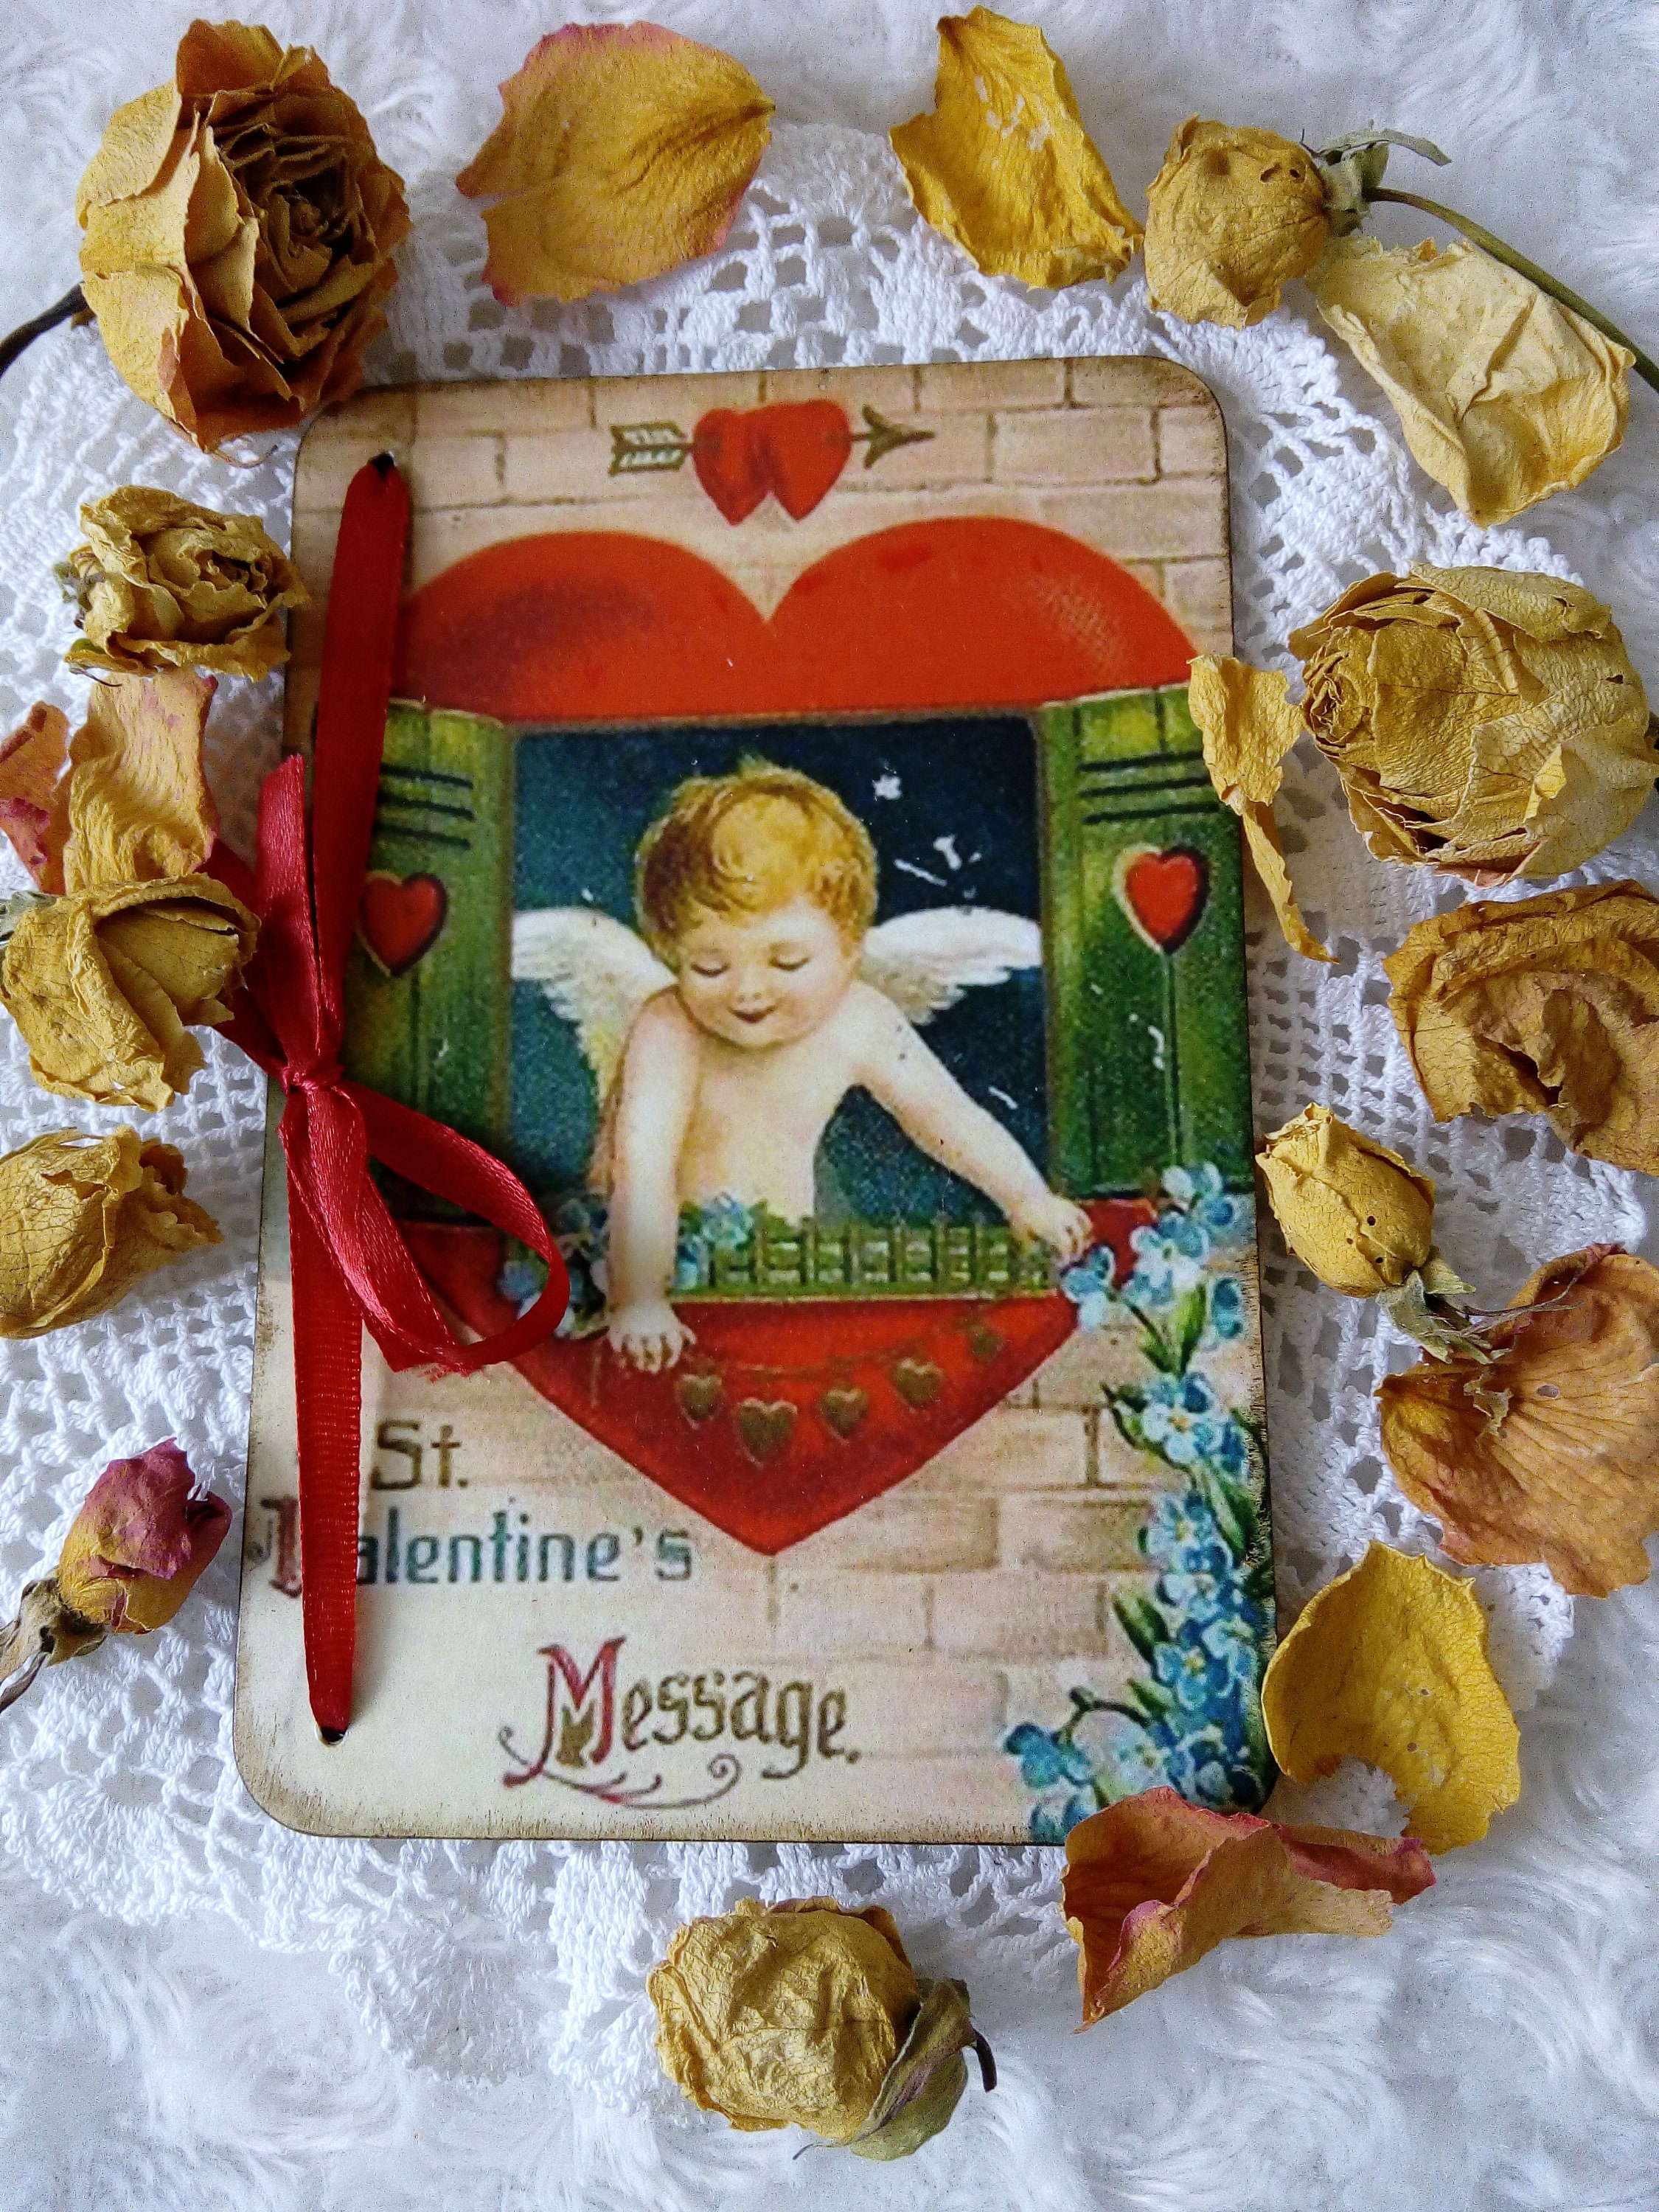 Vintage Valentines Day Card, Old Fashioned Valentines, Vintage